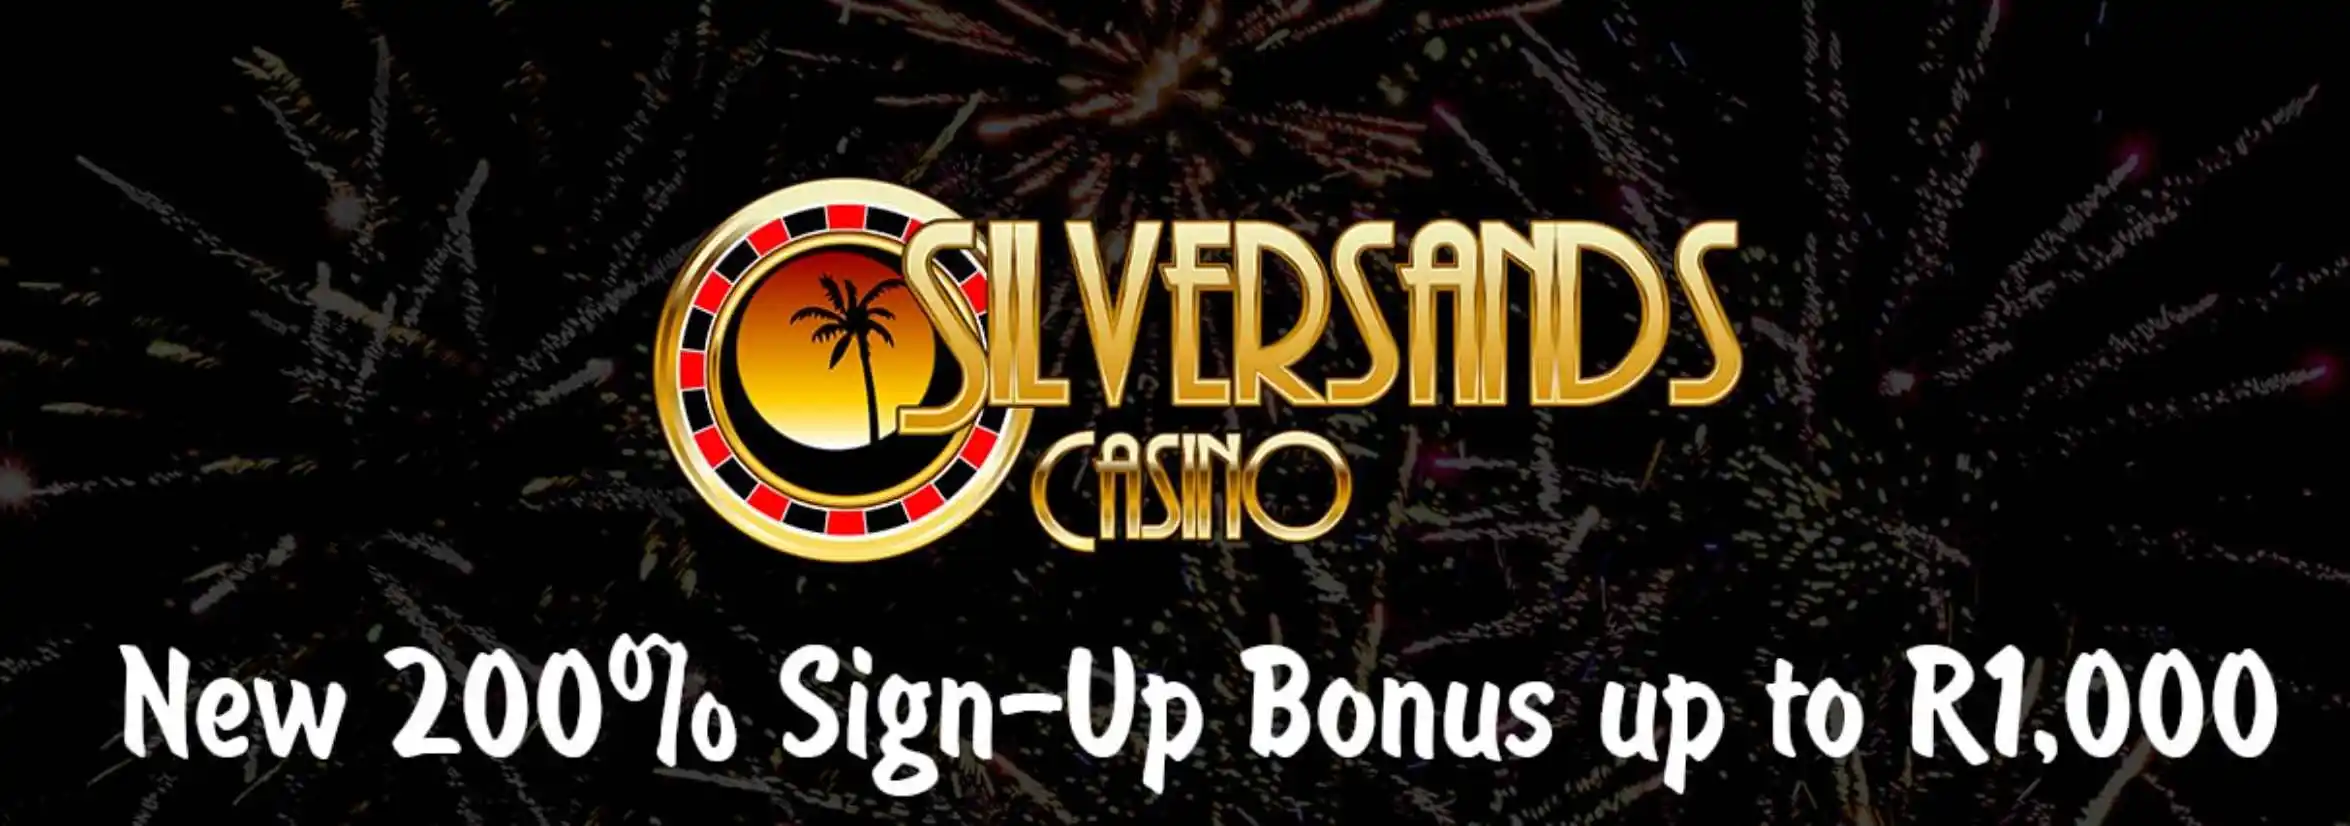 SilverSands Casino Sign-Up Bonus